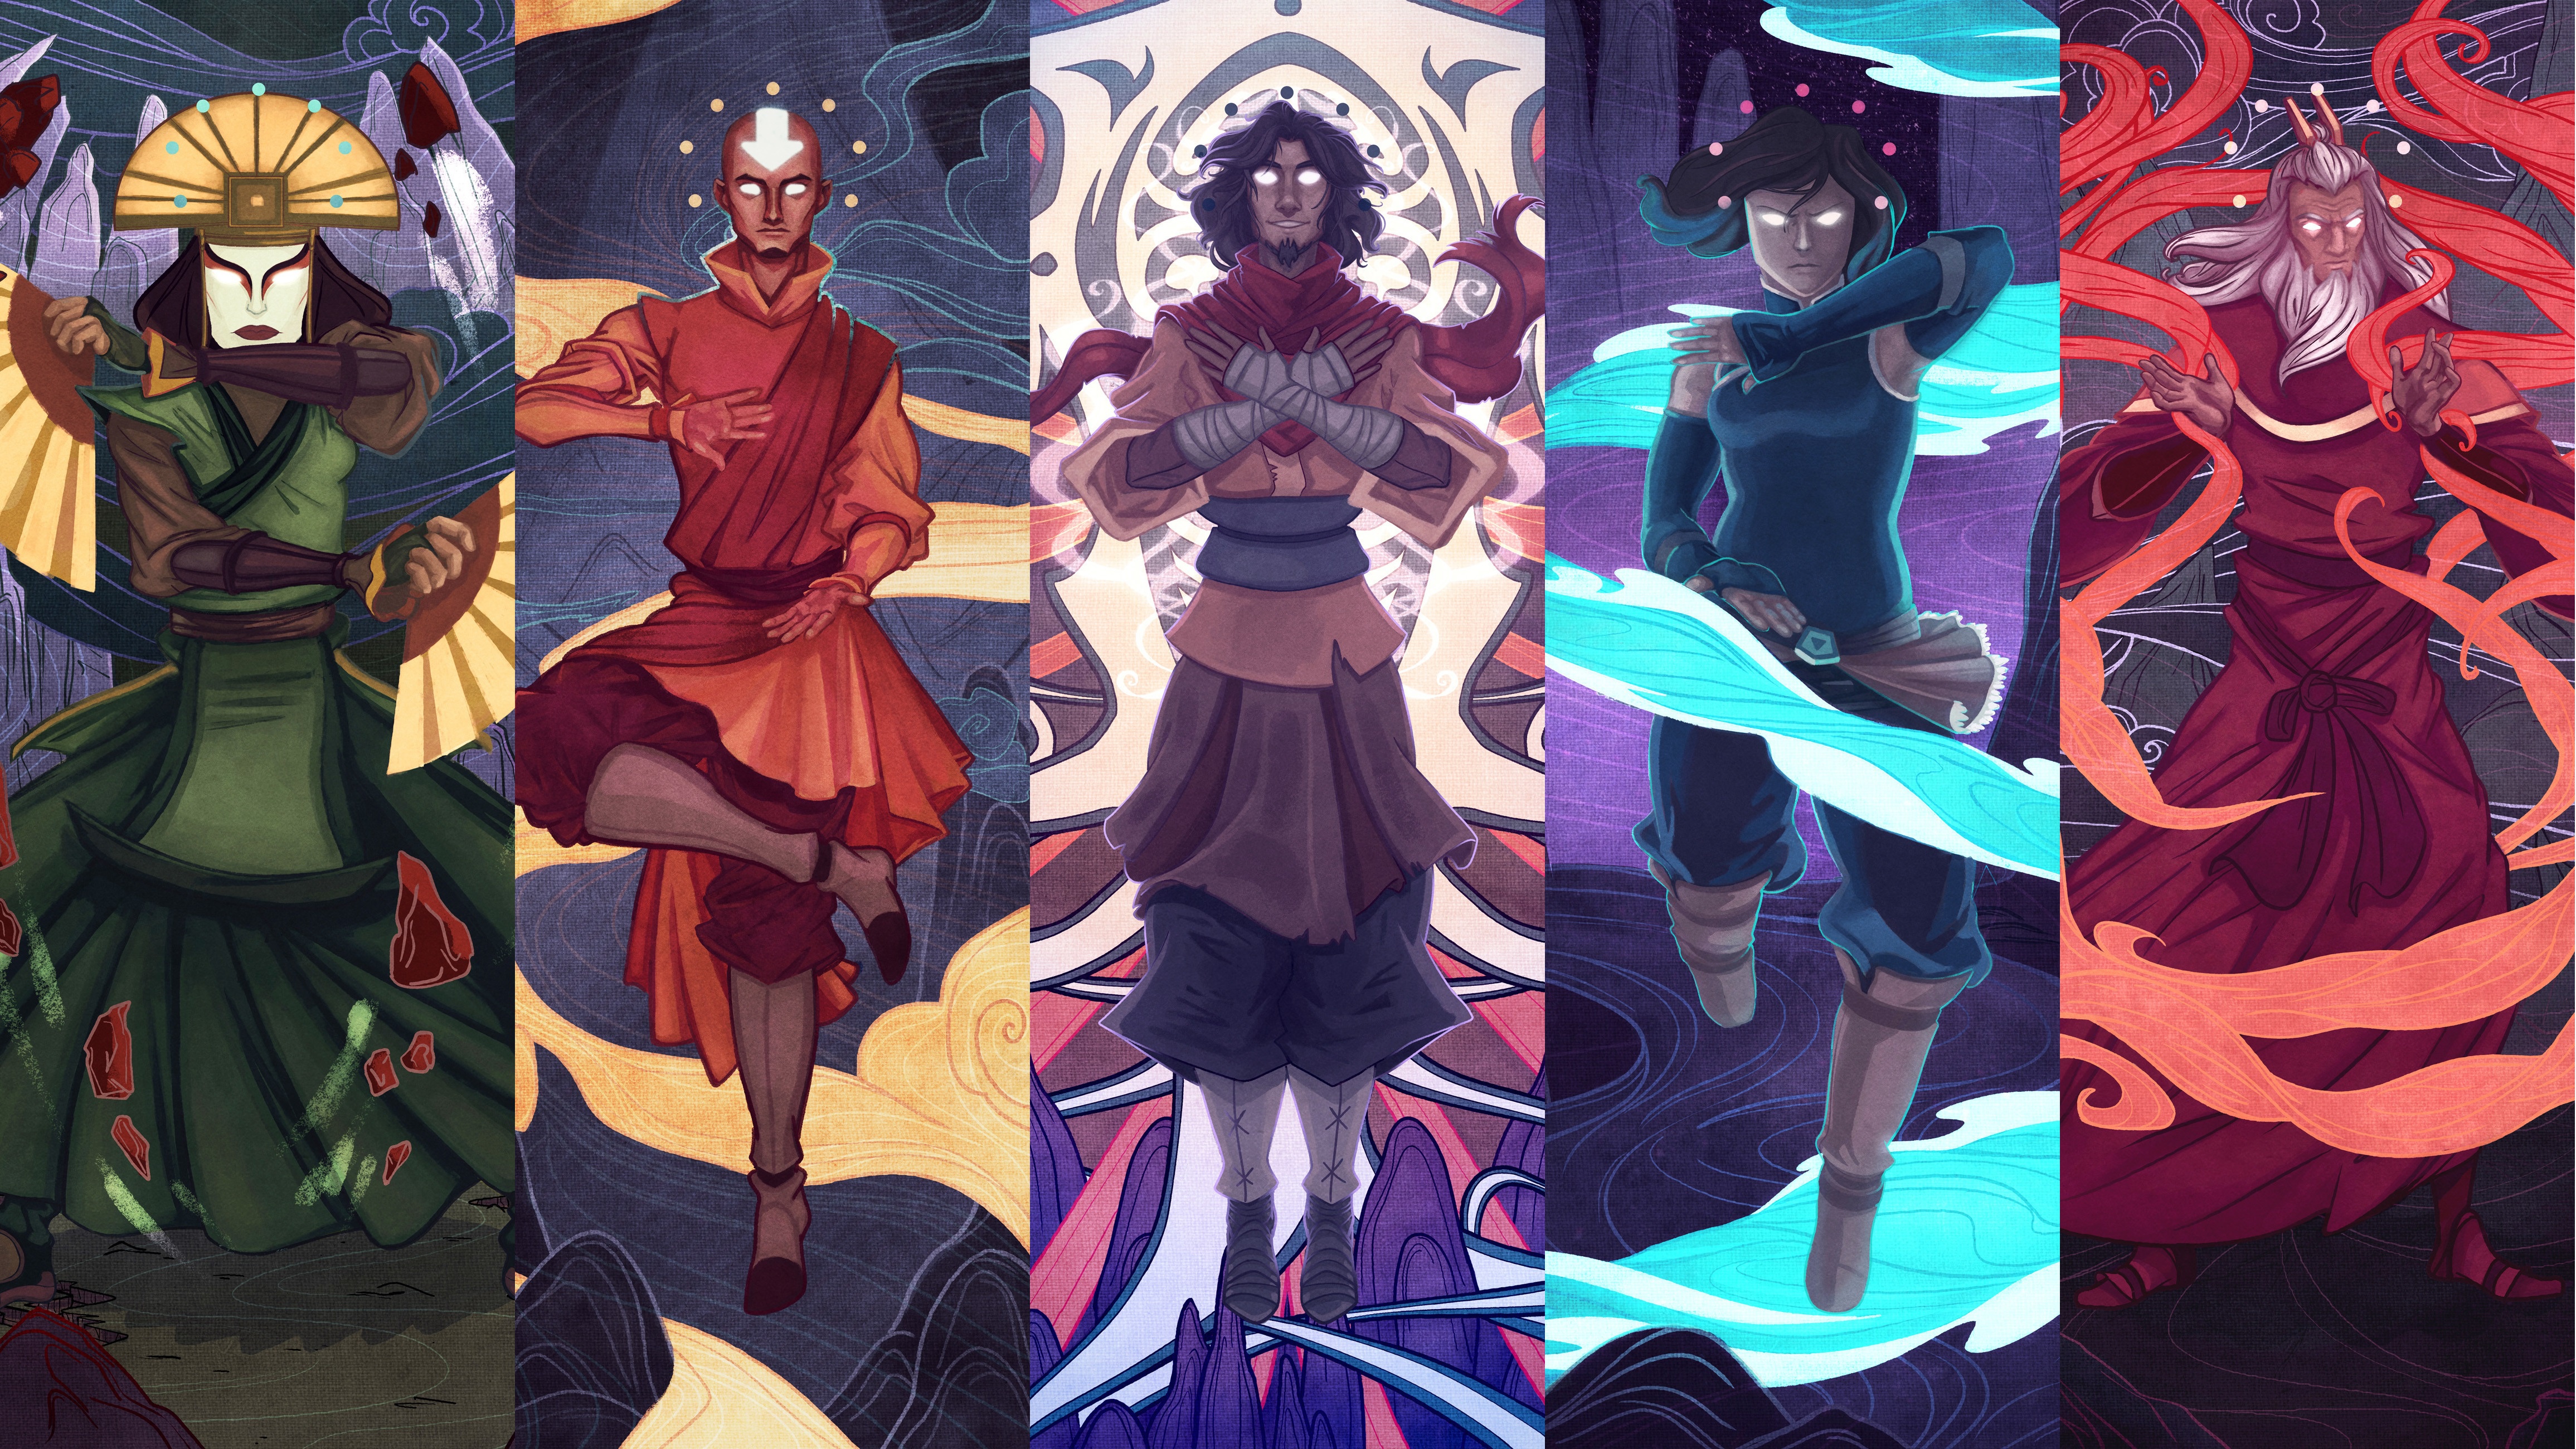 Anime Avatar: The Legend Of Korra HD Wallpaper | Background Image